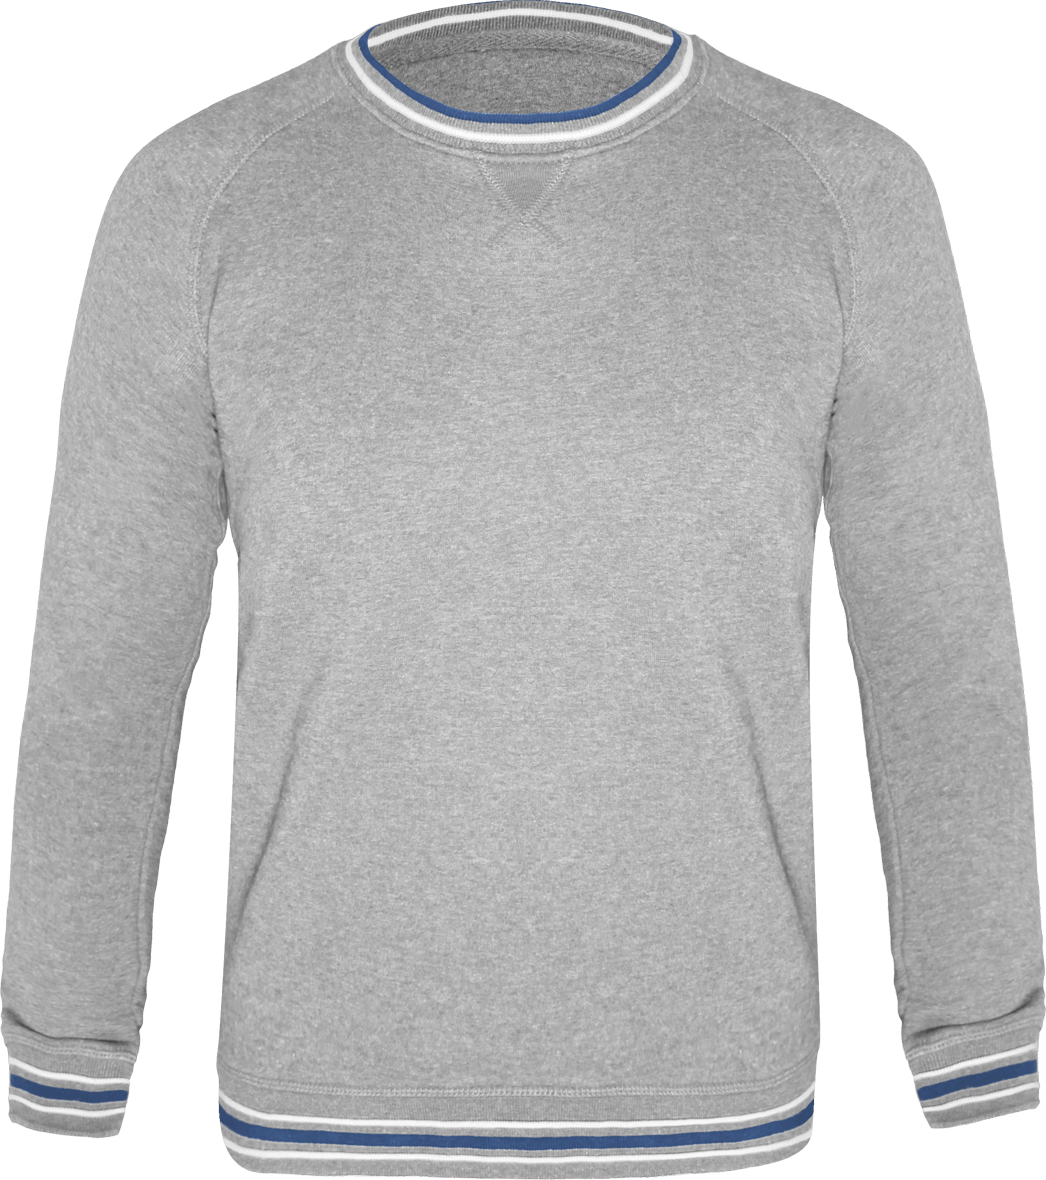 Customizable Stanley Strolls Tipped Men's Sweatshirt Dark H Grey / White / Burgundy